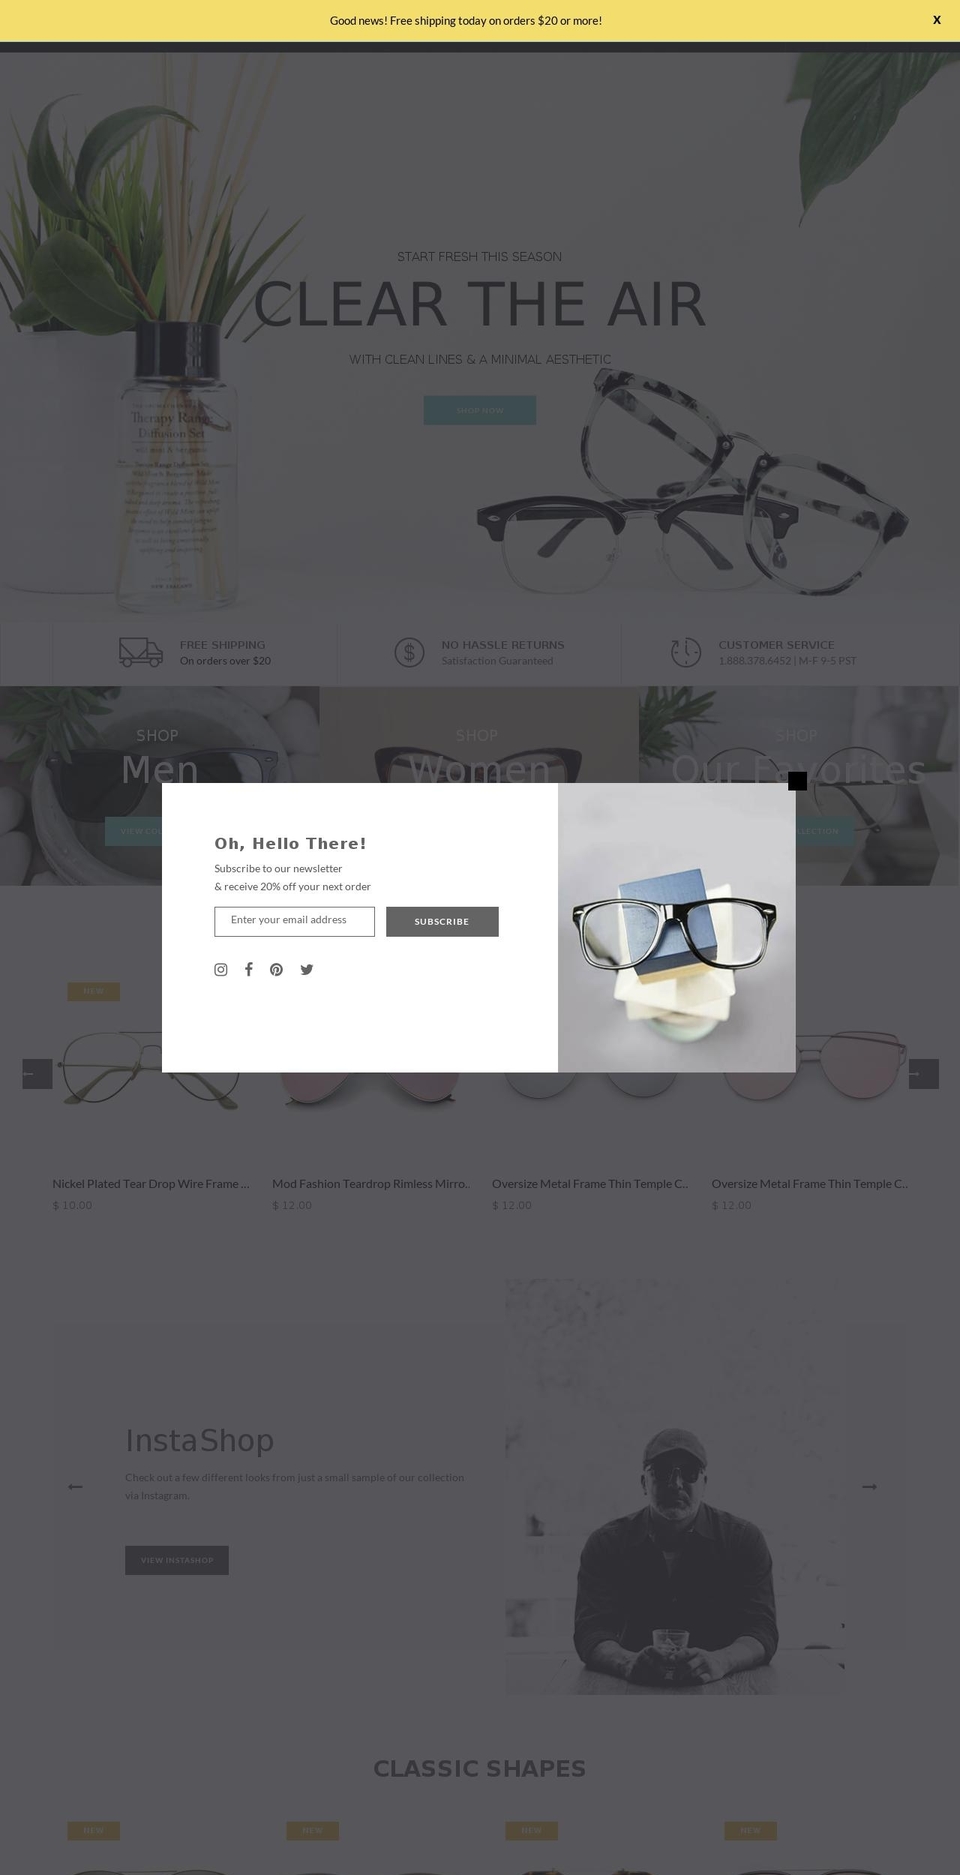 sunglass.la shopify website screenshot